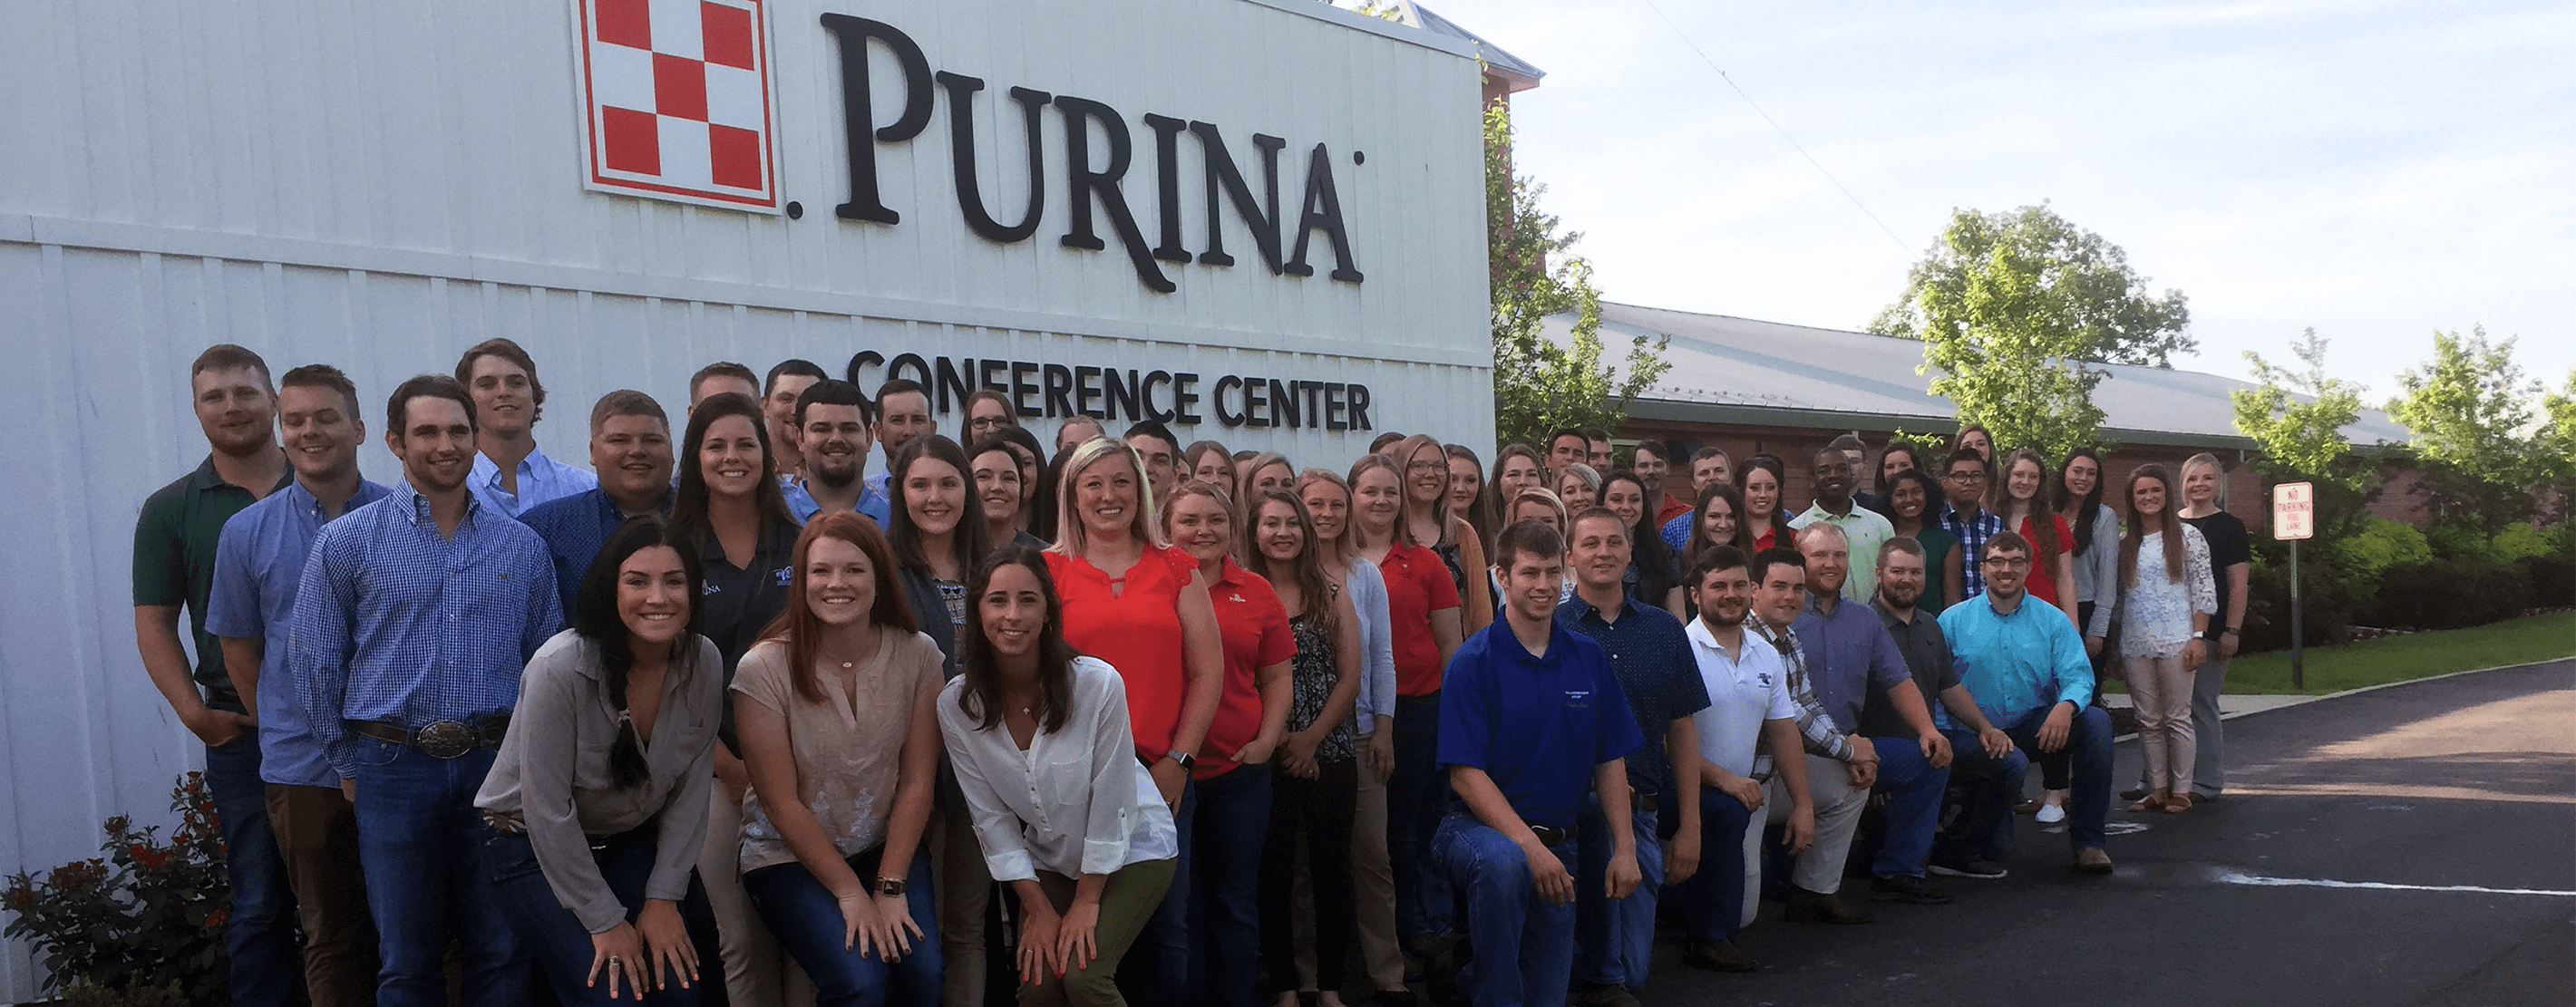 Land O'Lakes Inc. - Need talent? Purina feed sales internship delivers